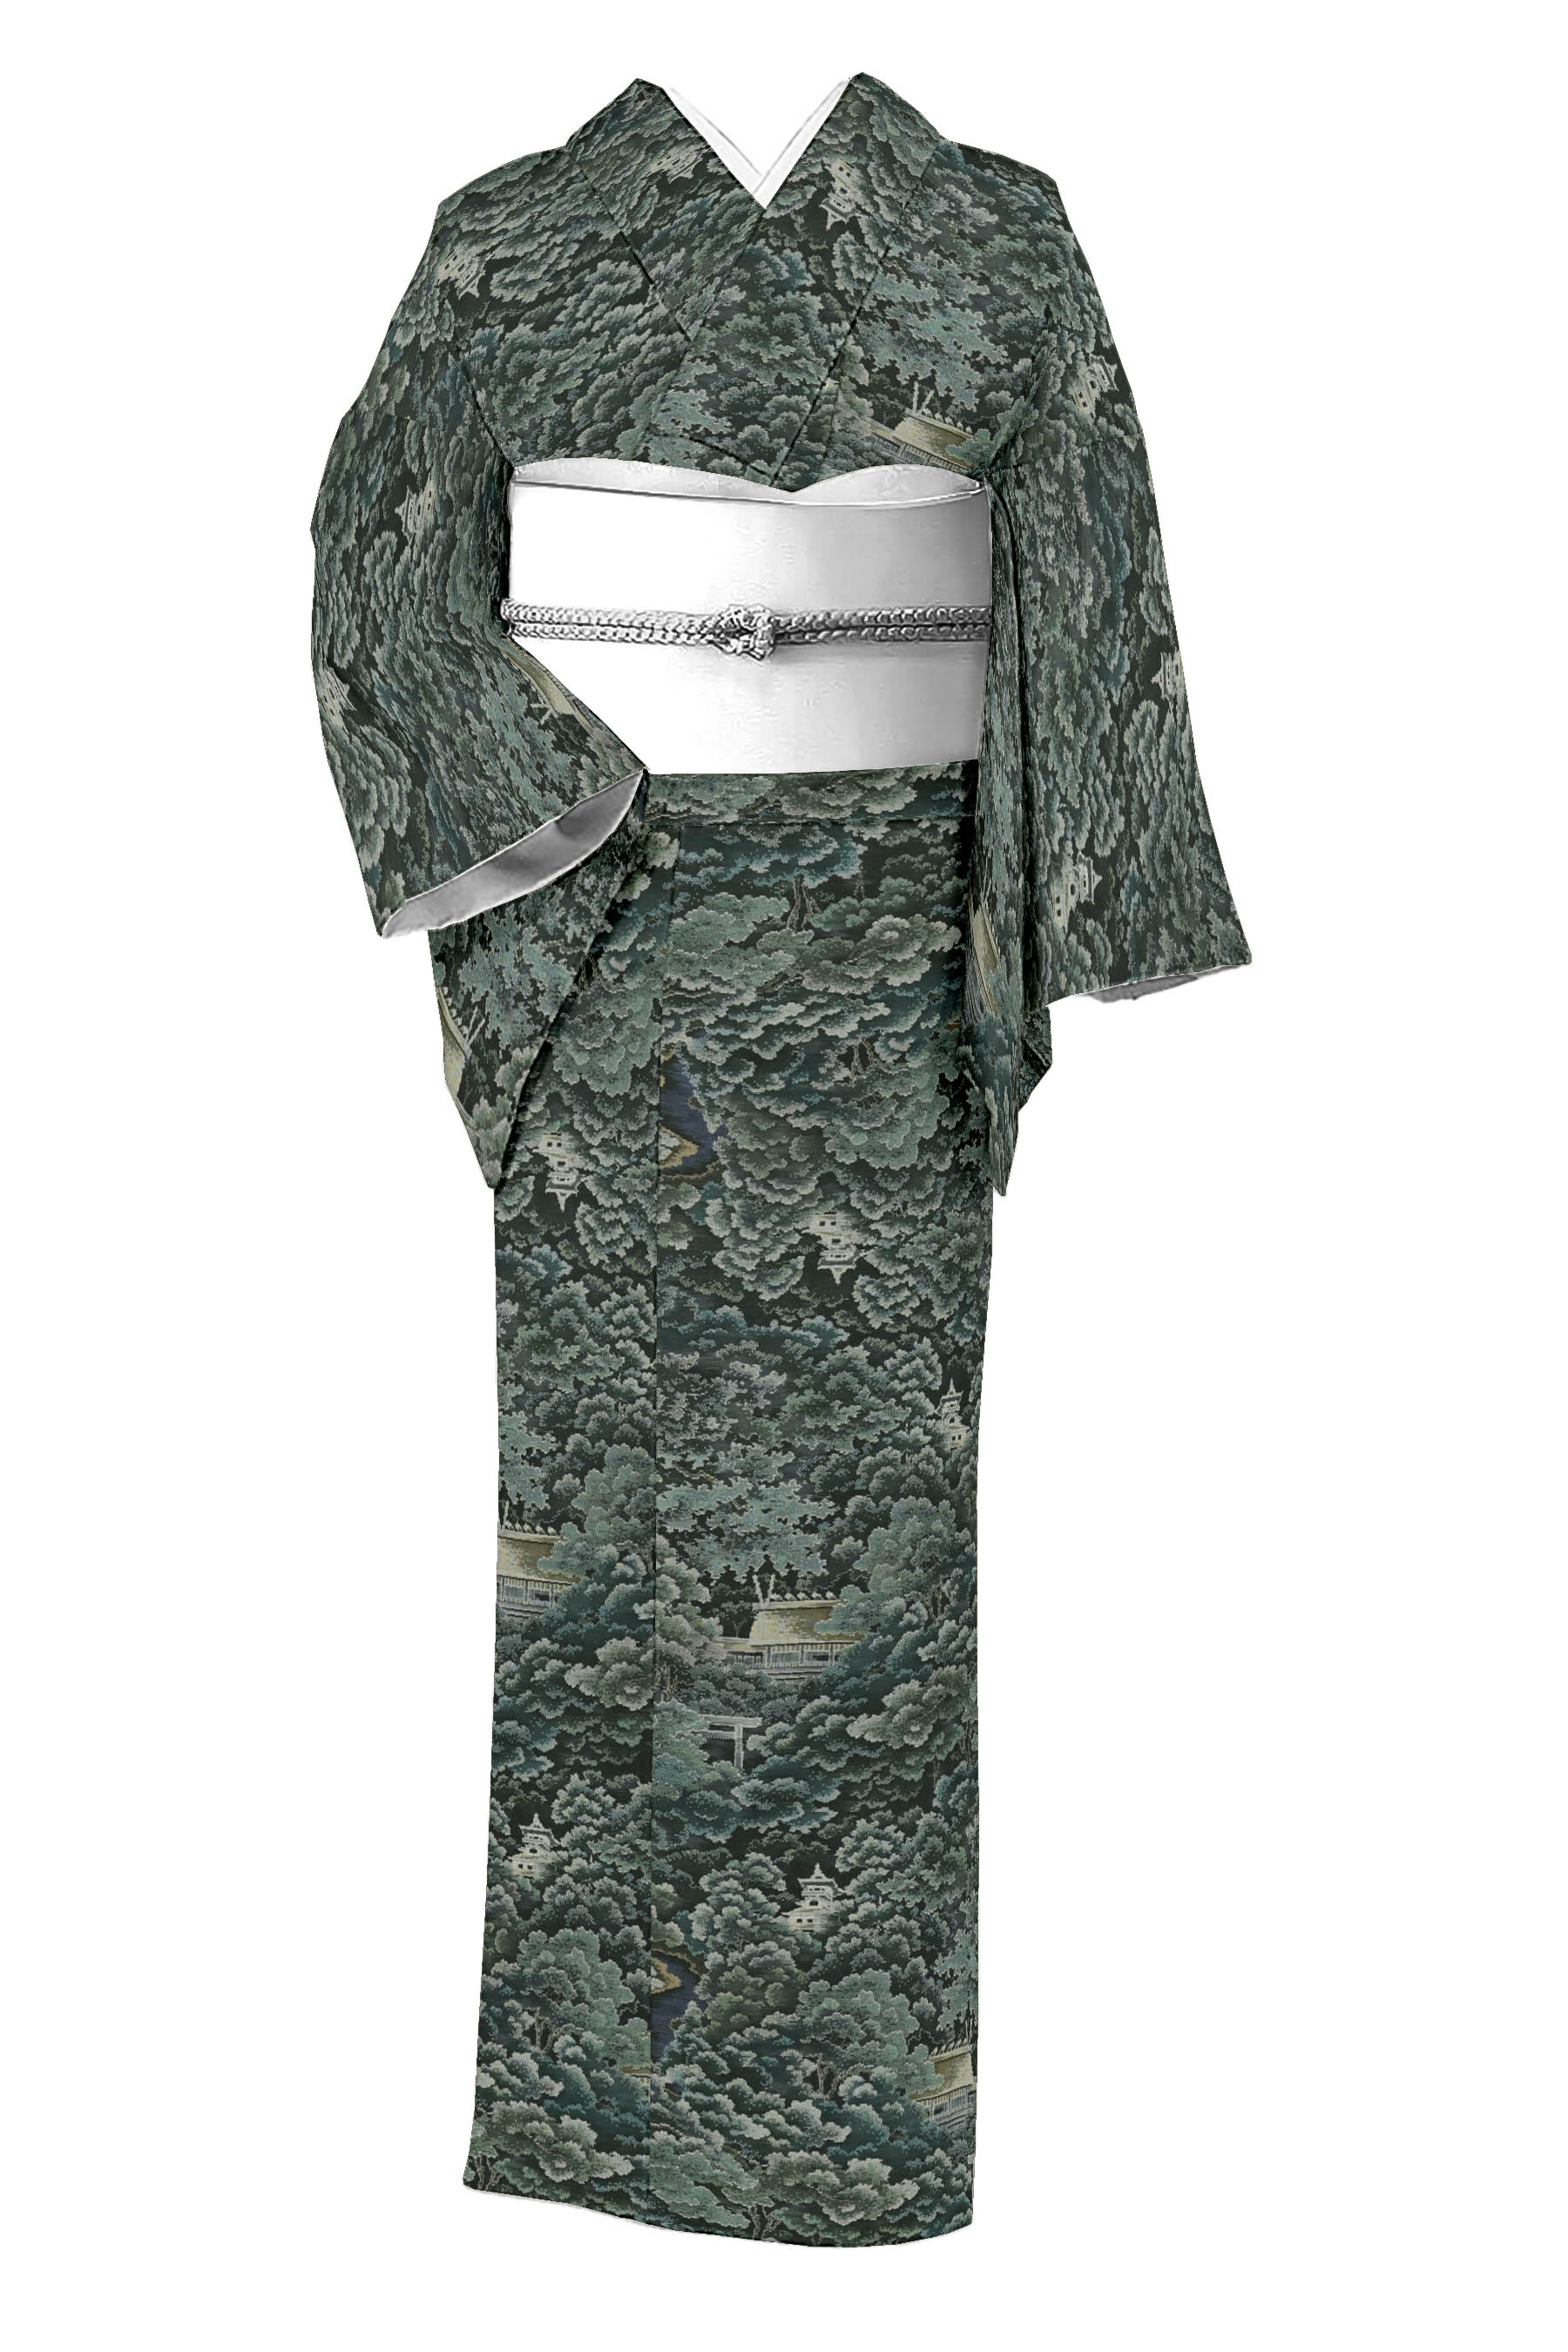 Emanuel Ungaro ウンガロ イタリア製 シルクスカート 花柄 - スカート